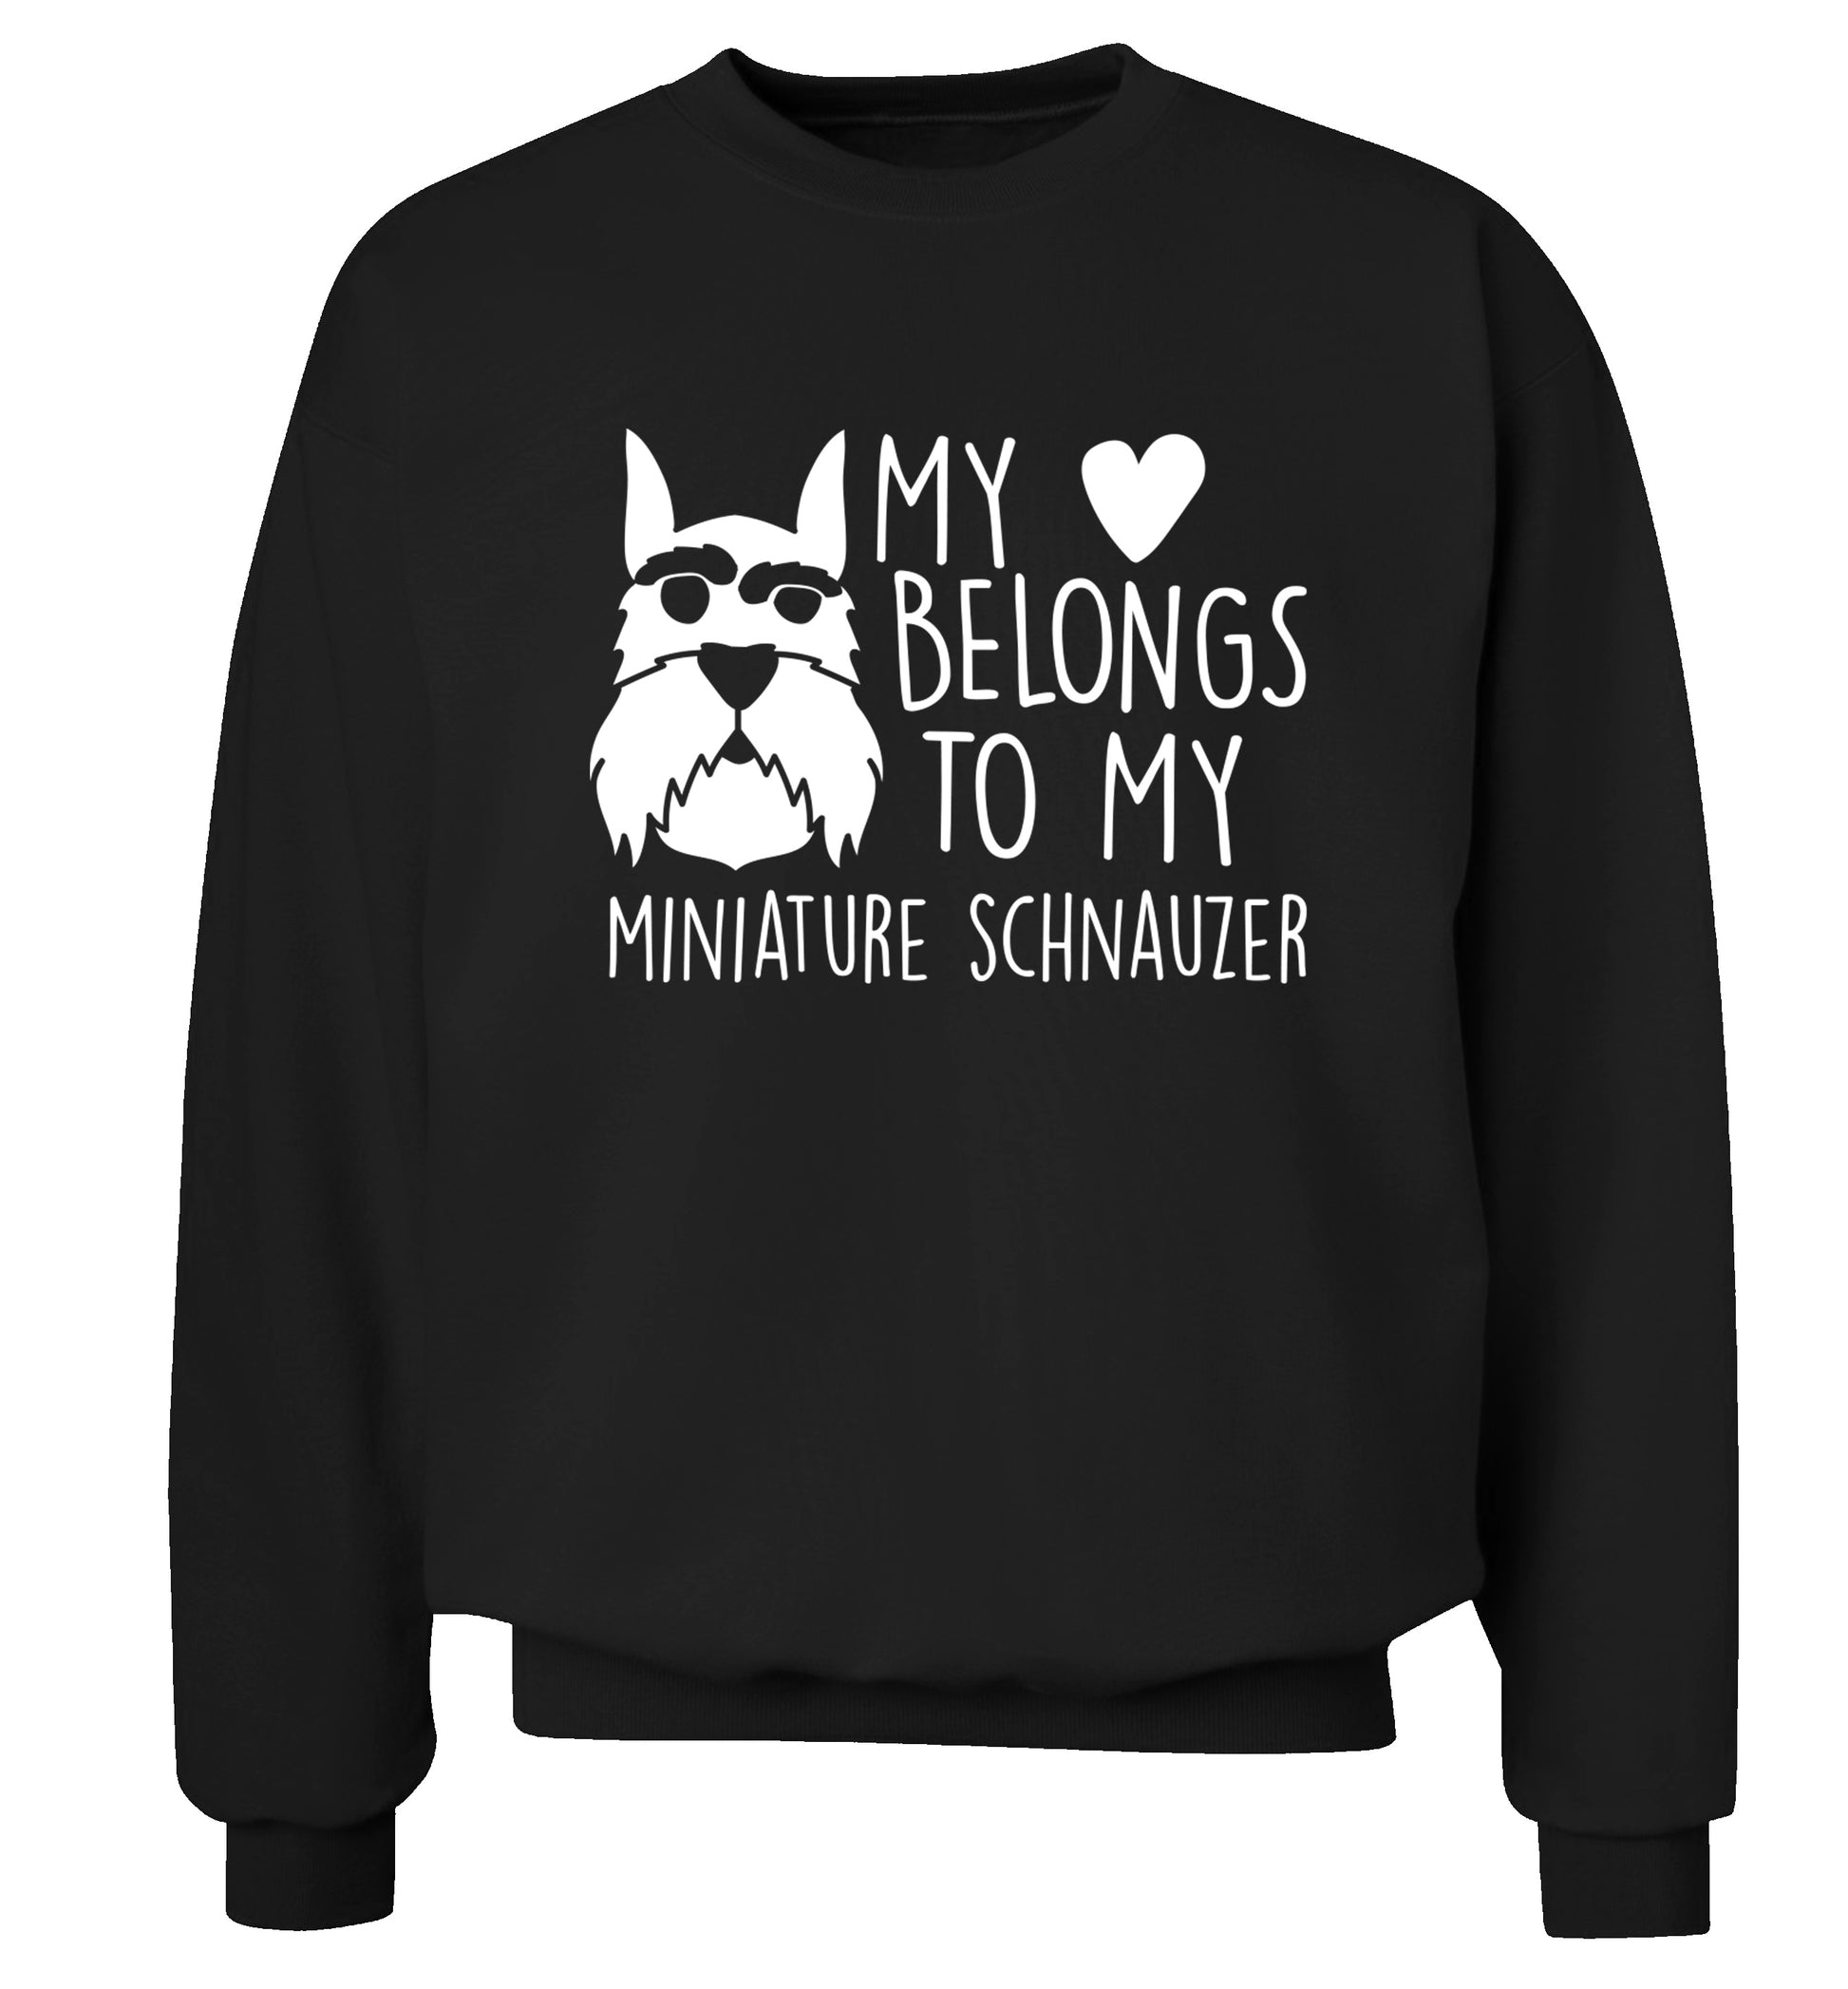 My heart belongs to my miniature schnauzer Adult's unisex black Sweater 2XL